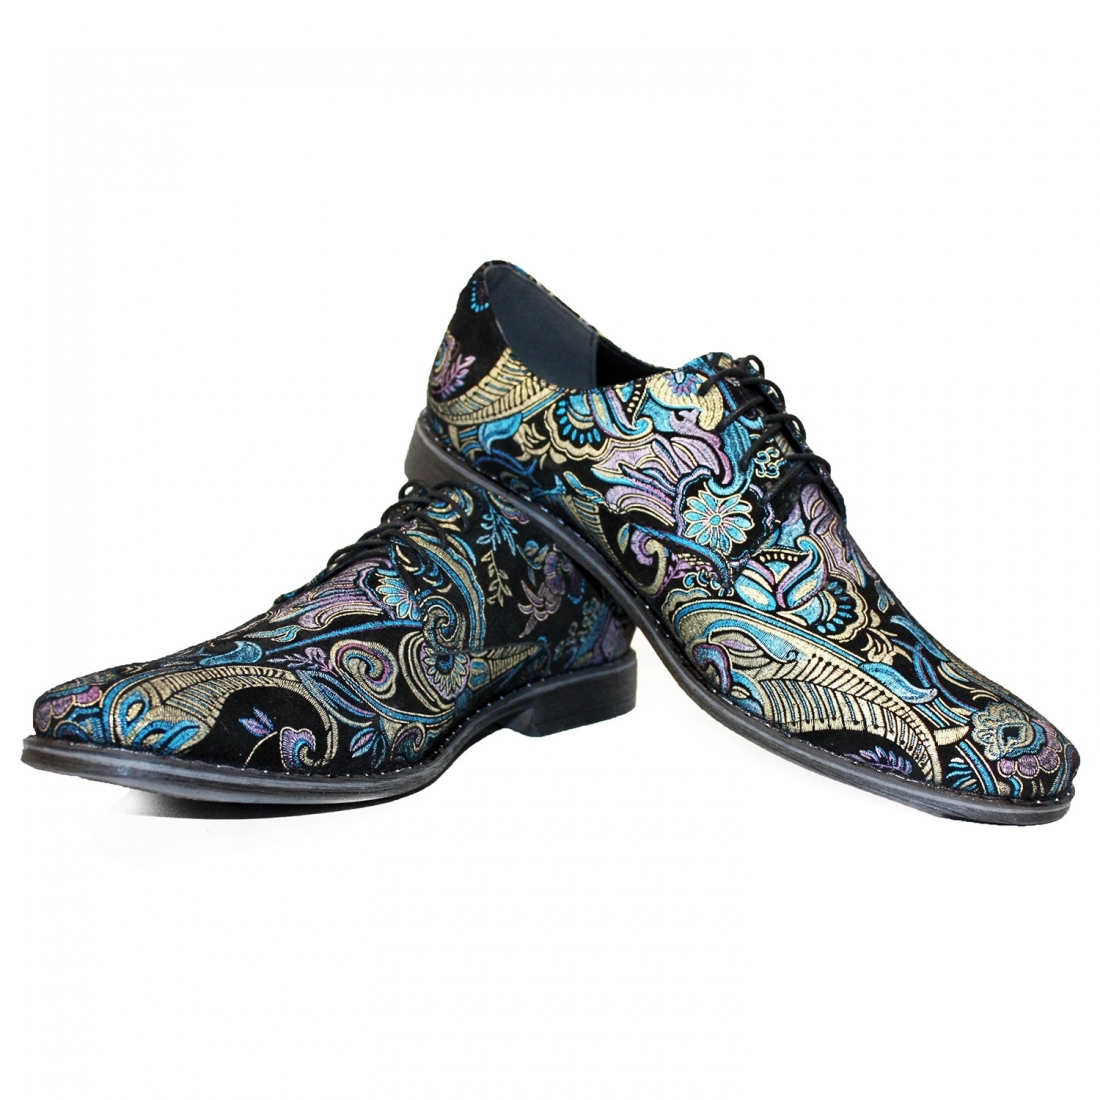 Modello Shpanerro - Classic Shoes - Handmade Colorful Italian Leather Shoes